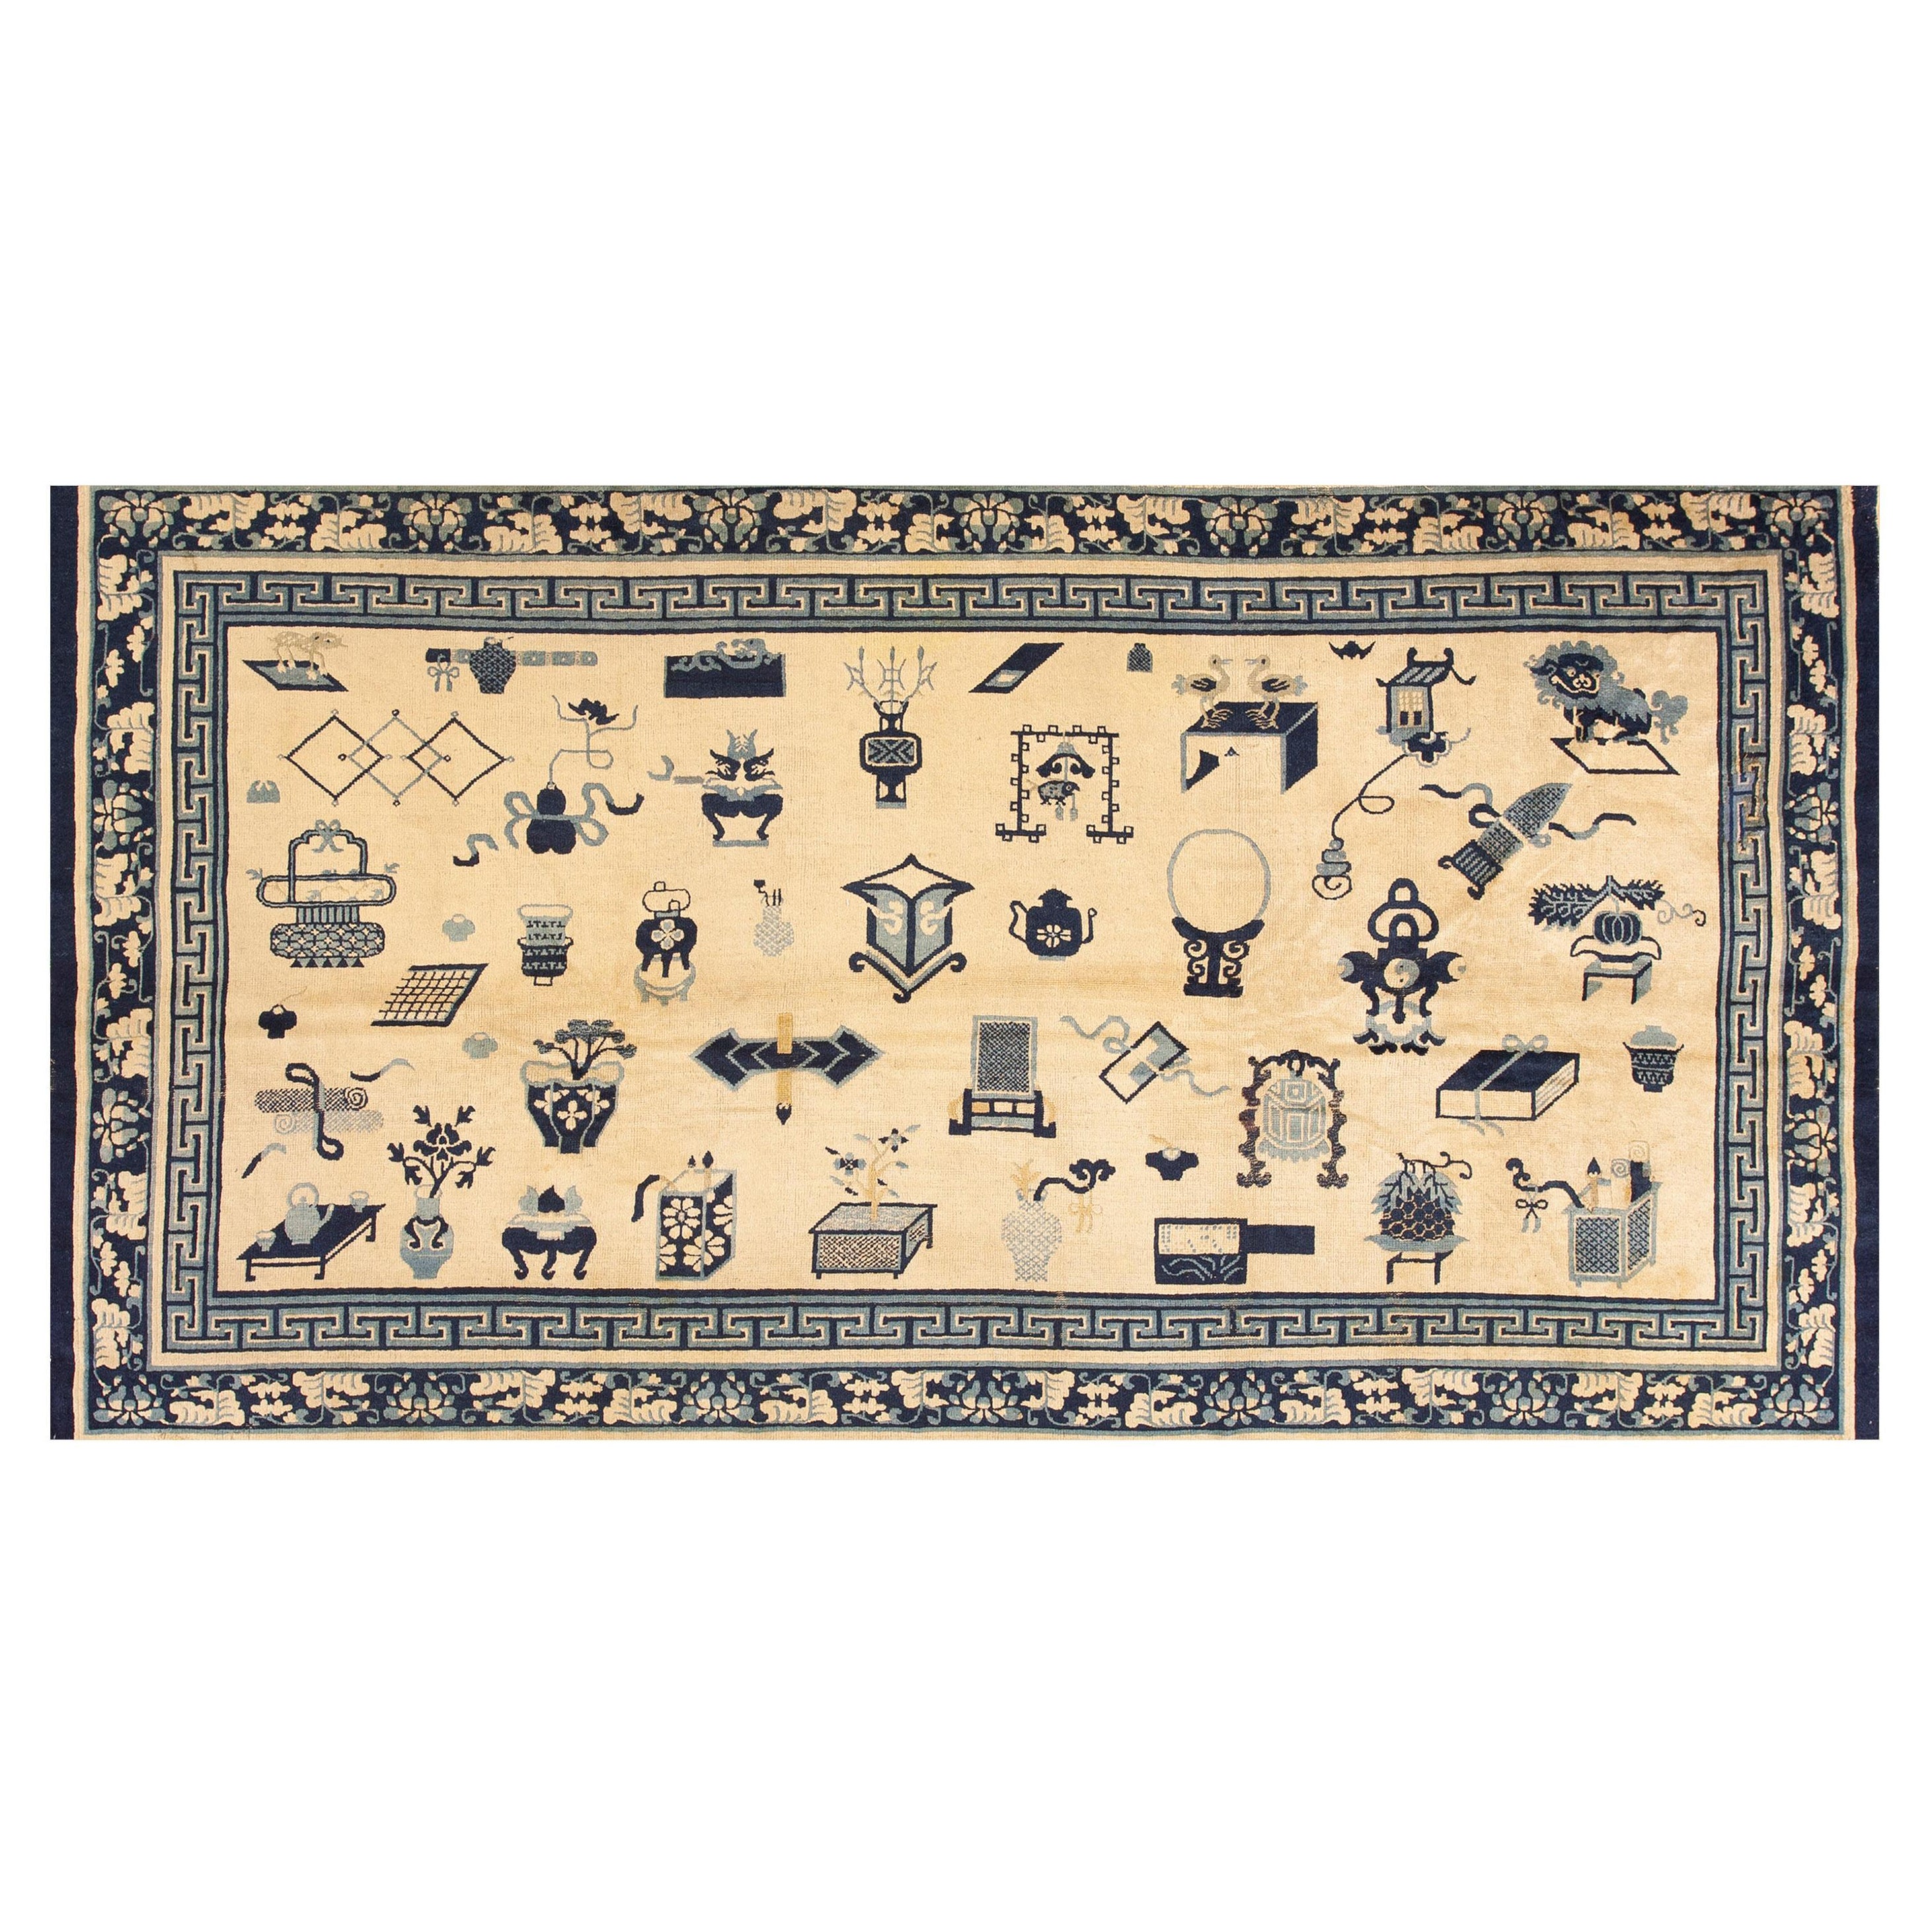 Mid 19th Century Chinese Ningxia Carpet ( 5' 6'' x 10' 7'' - 167 x 322 cm )